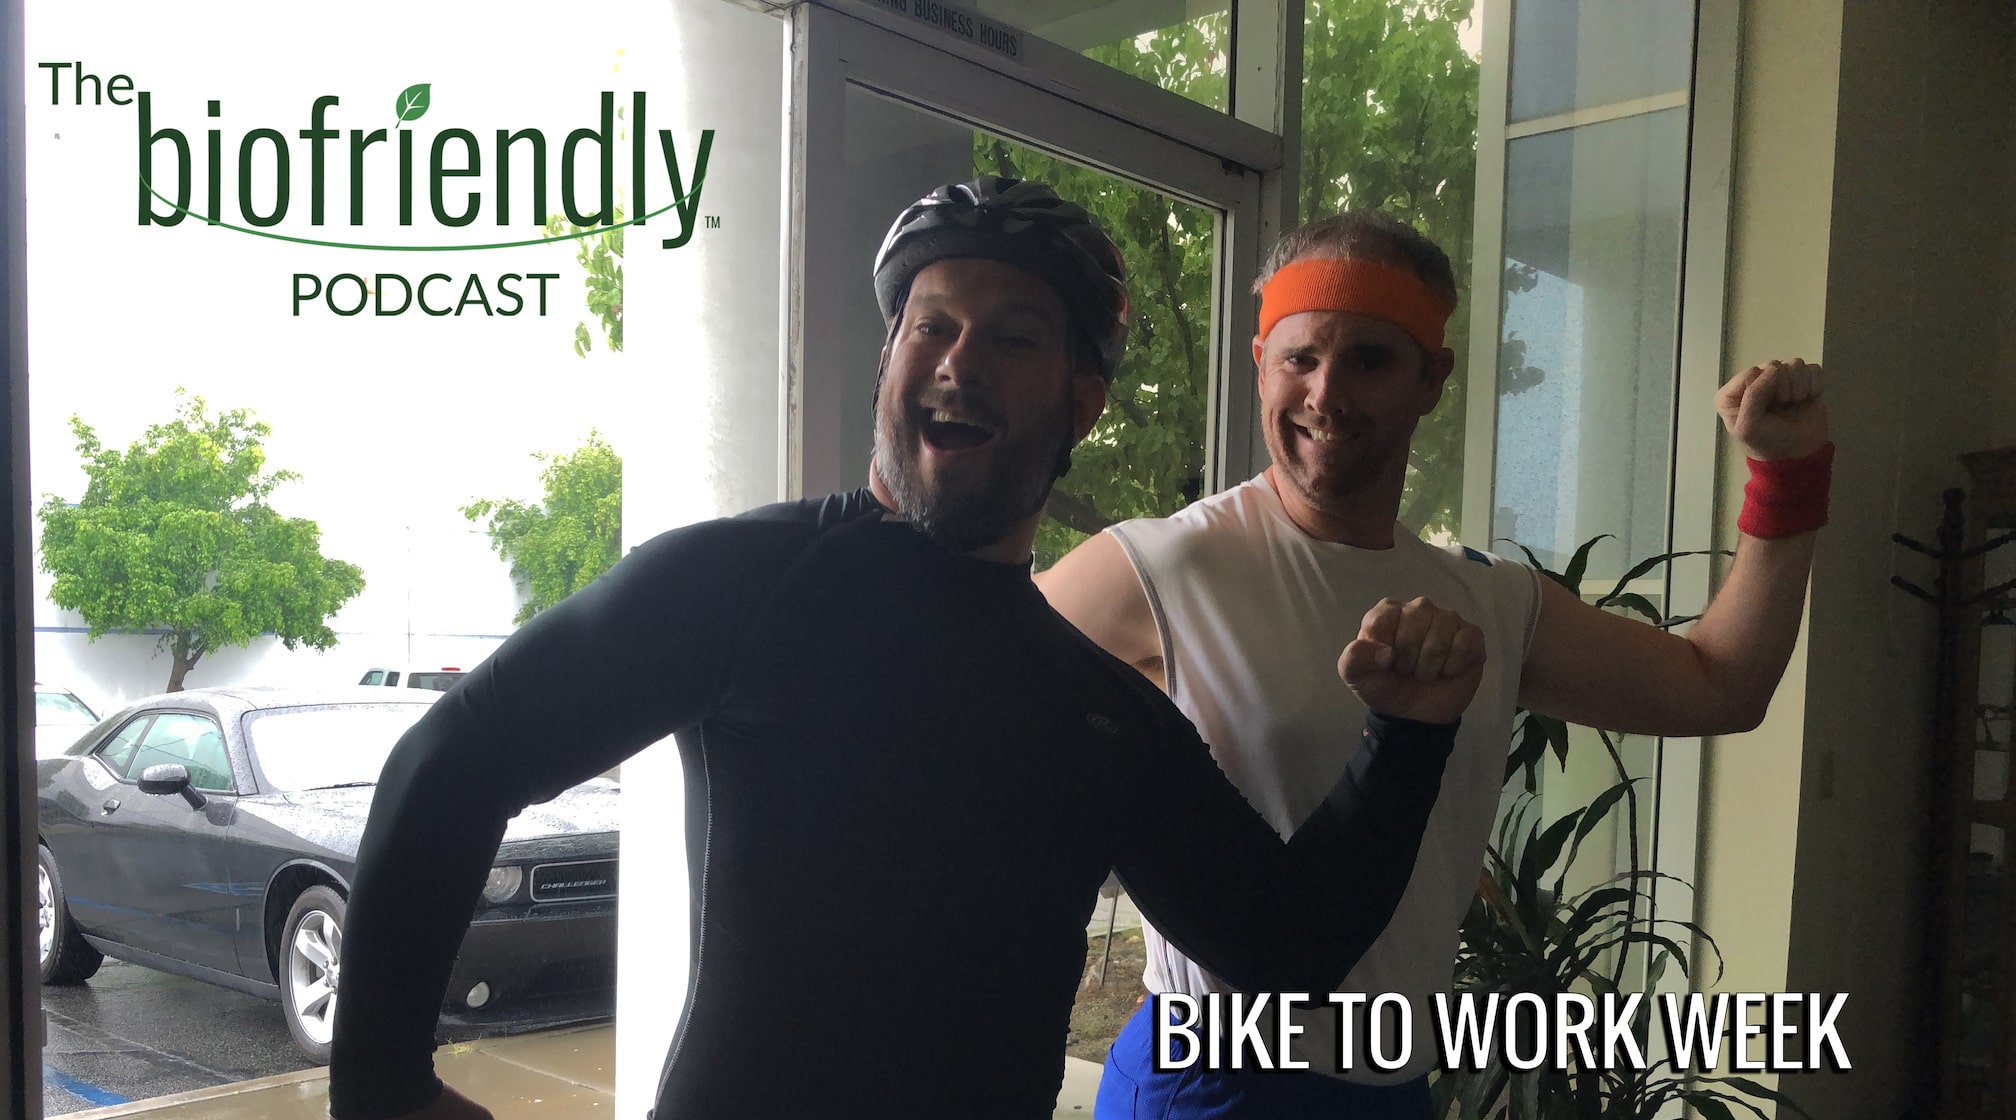 The Biofriendly Podcast - Episode 13 - Bike To Work Week